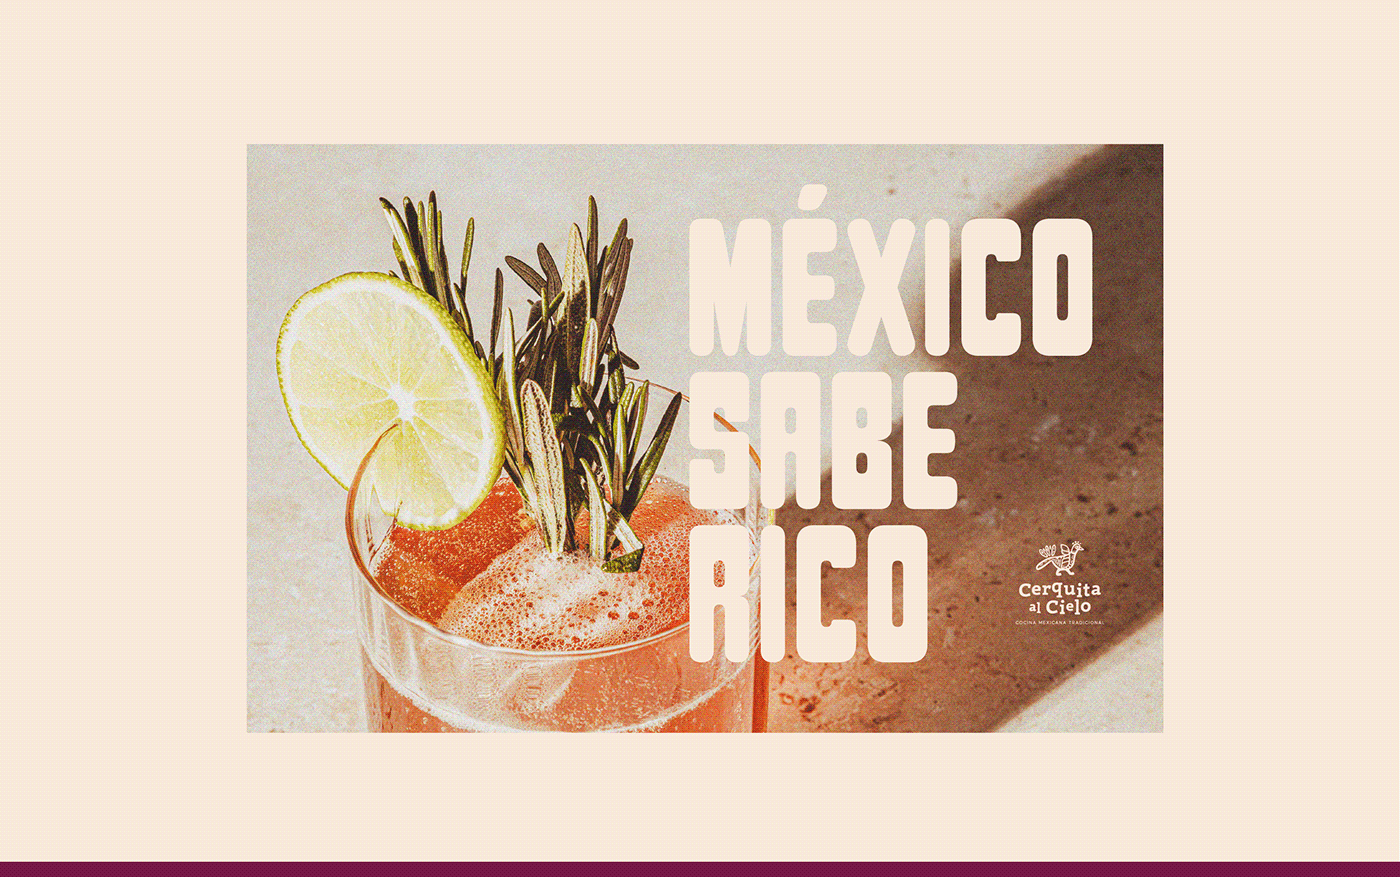 mexico Mexican Food alebrije Tacos bird CIelo restaurante branding  Brand Design logo